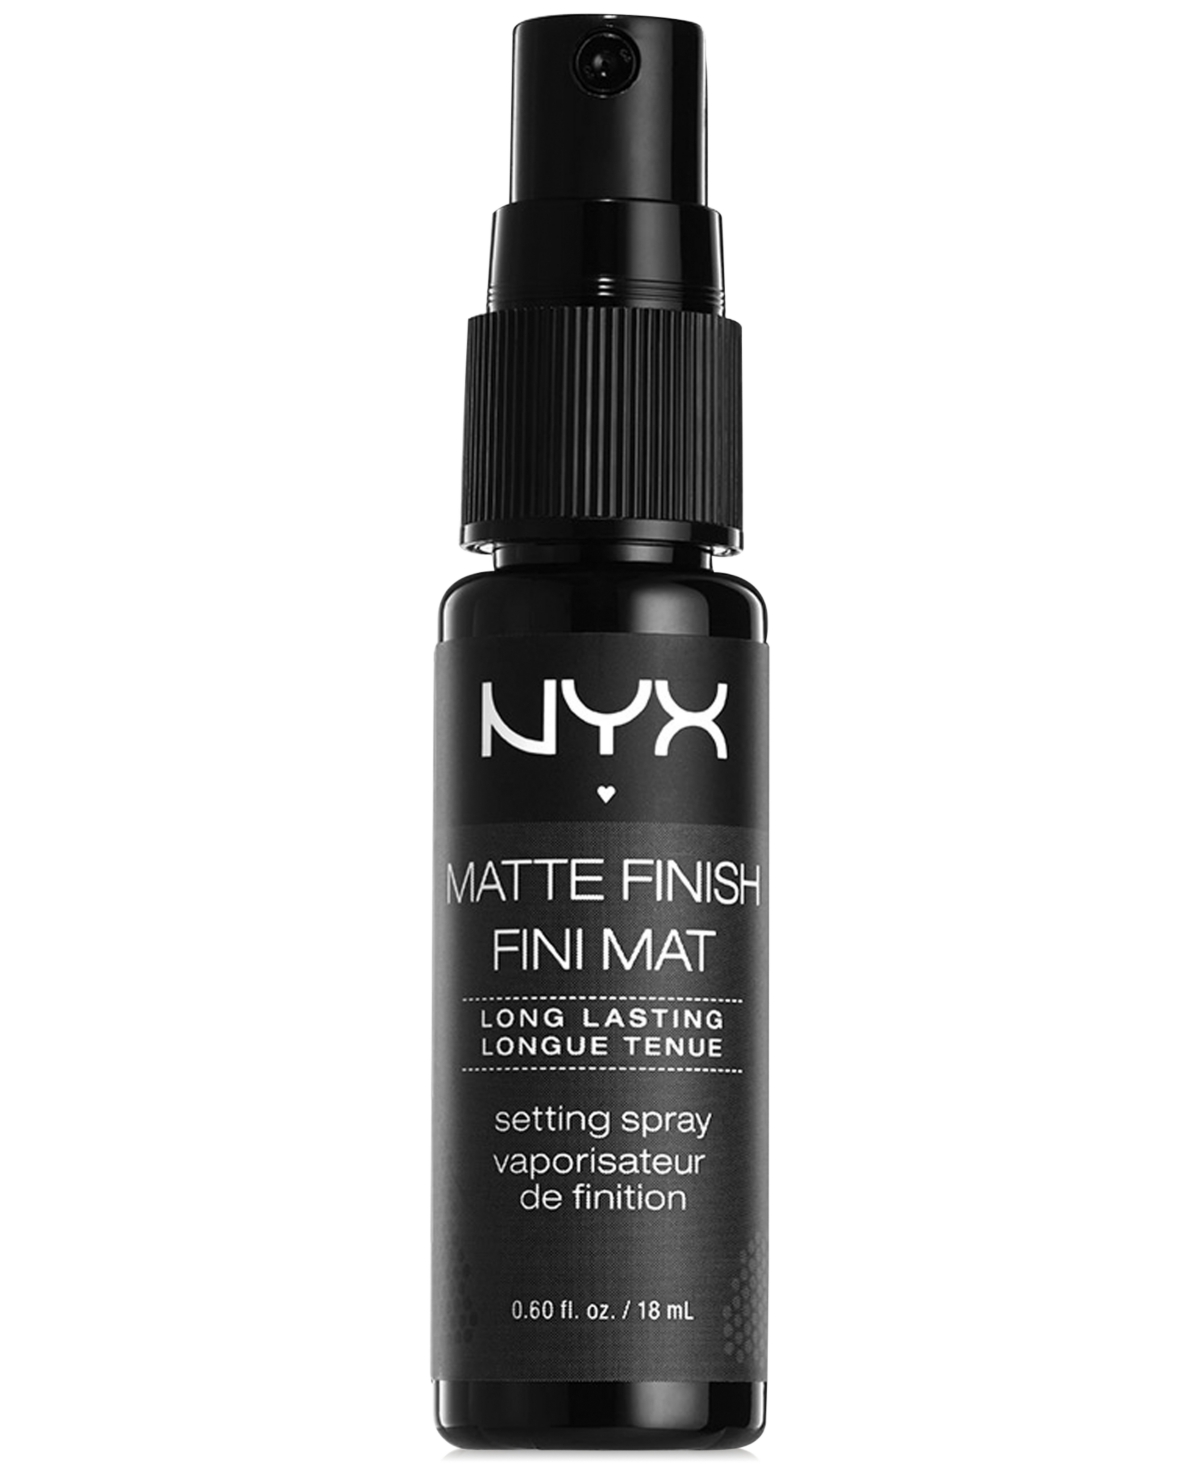 Matte Finish Long Lasting Makeup Setting Spray Formula, 0.6-oz. - Open